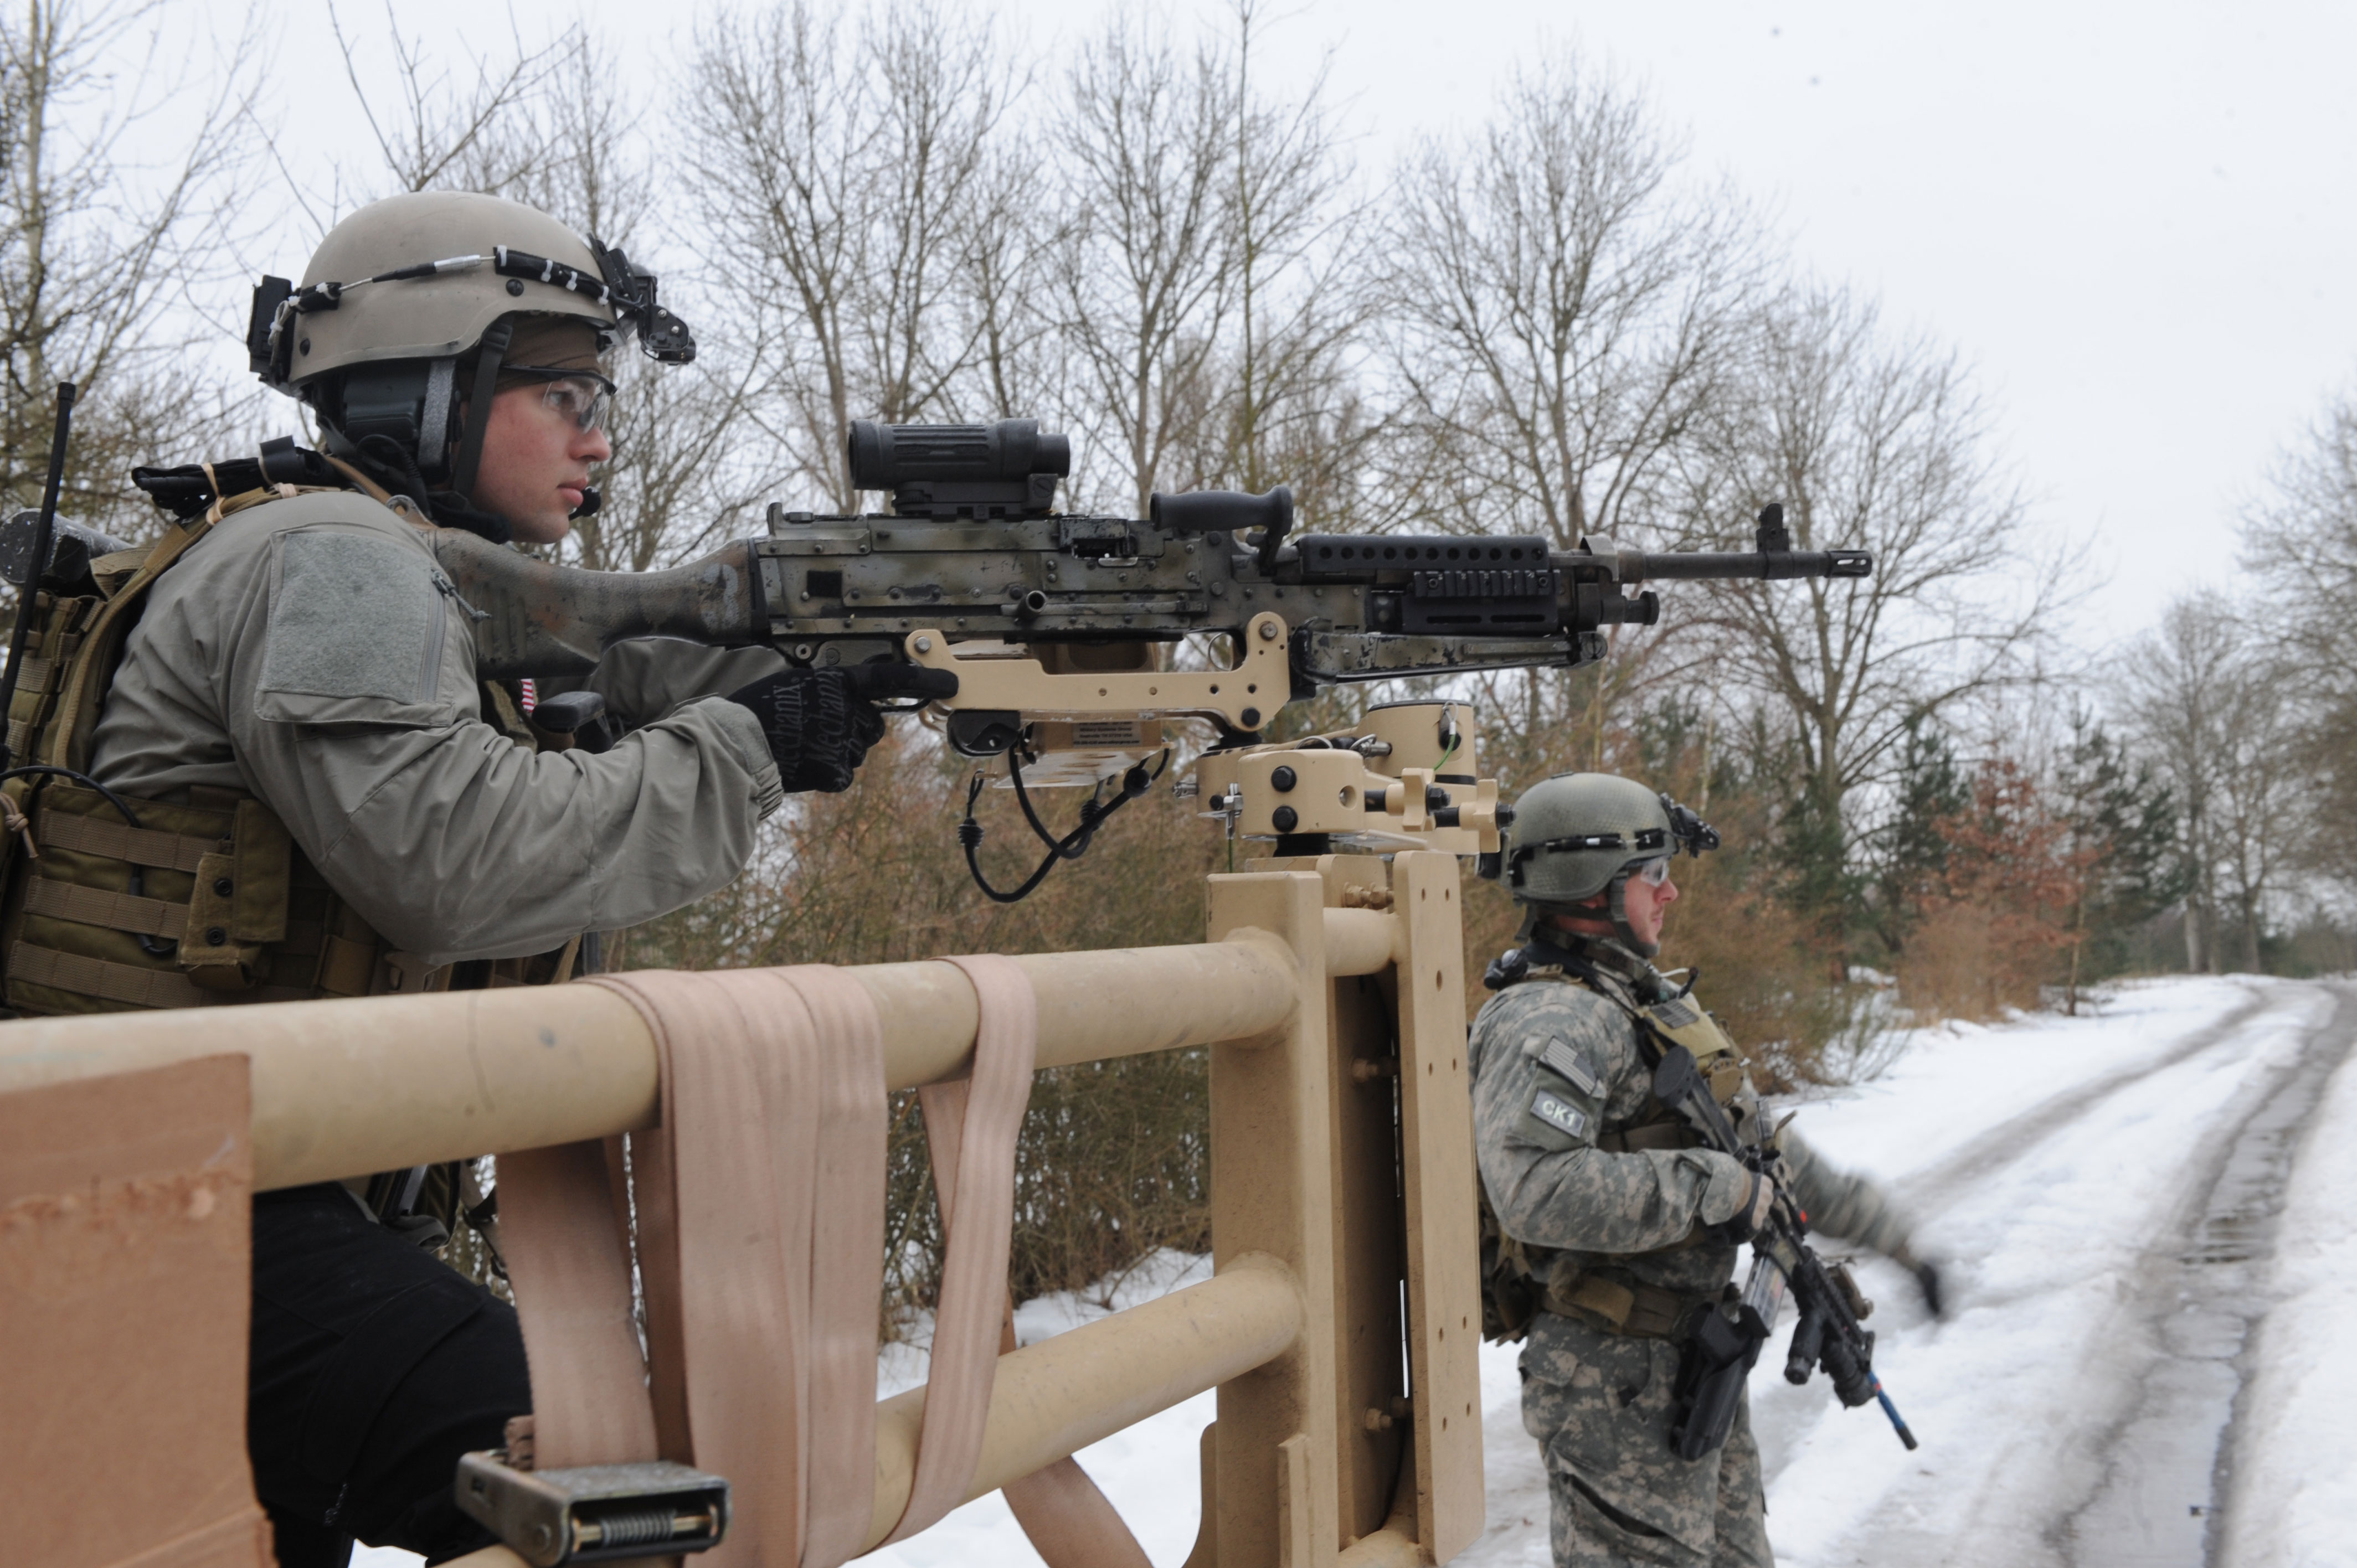 
Special Forces | M240 Machine Gun